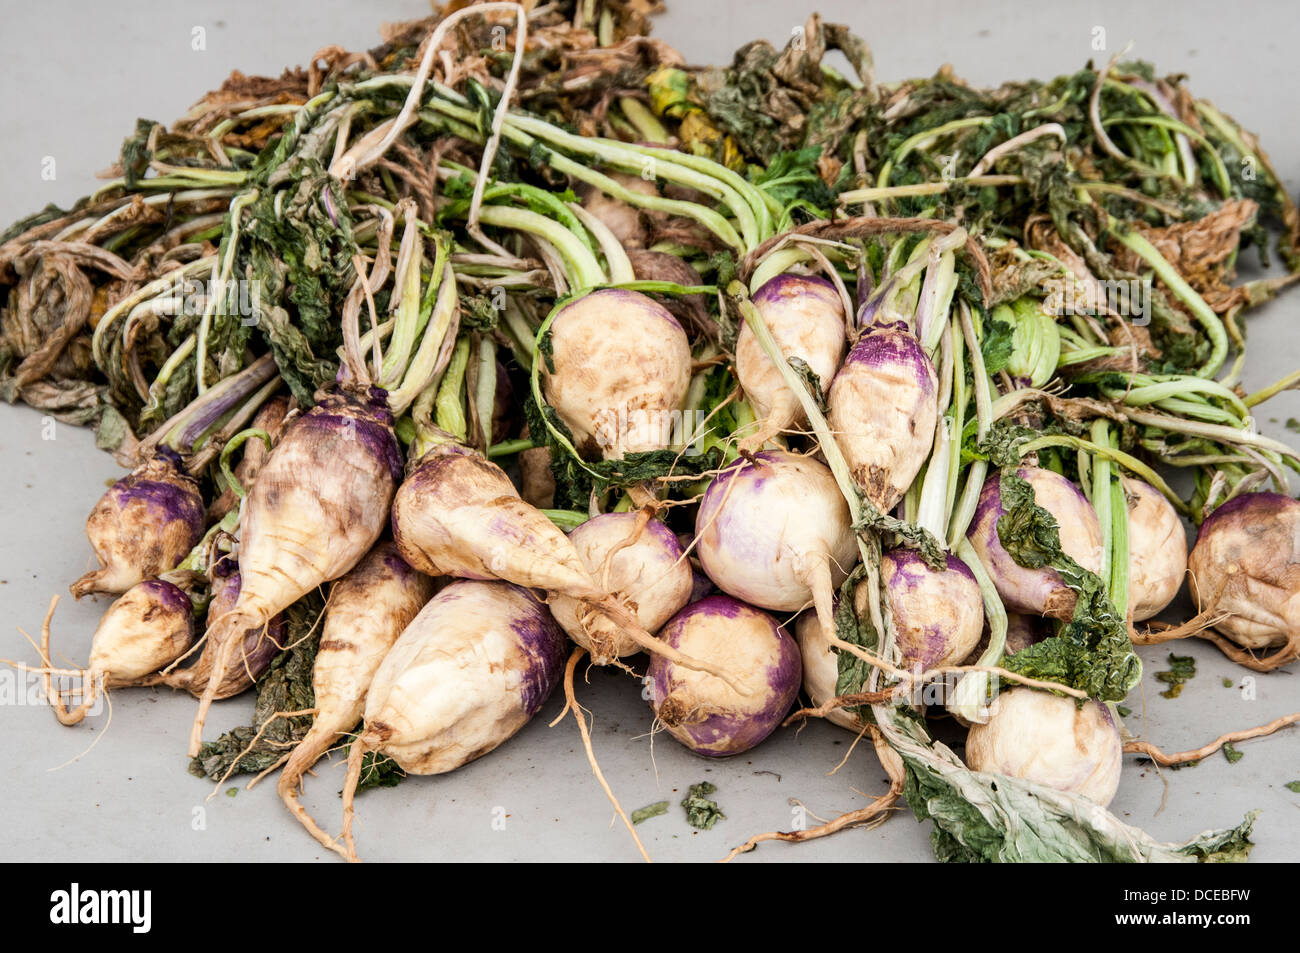 USA, Louisiana, Atchafalaya Basin, Houma (Terrabonne Parish), L & A Seafood with locally-produced turnips (MR & PR). Stock Photo